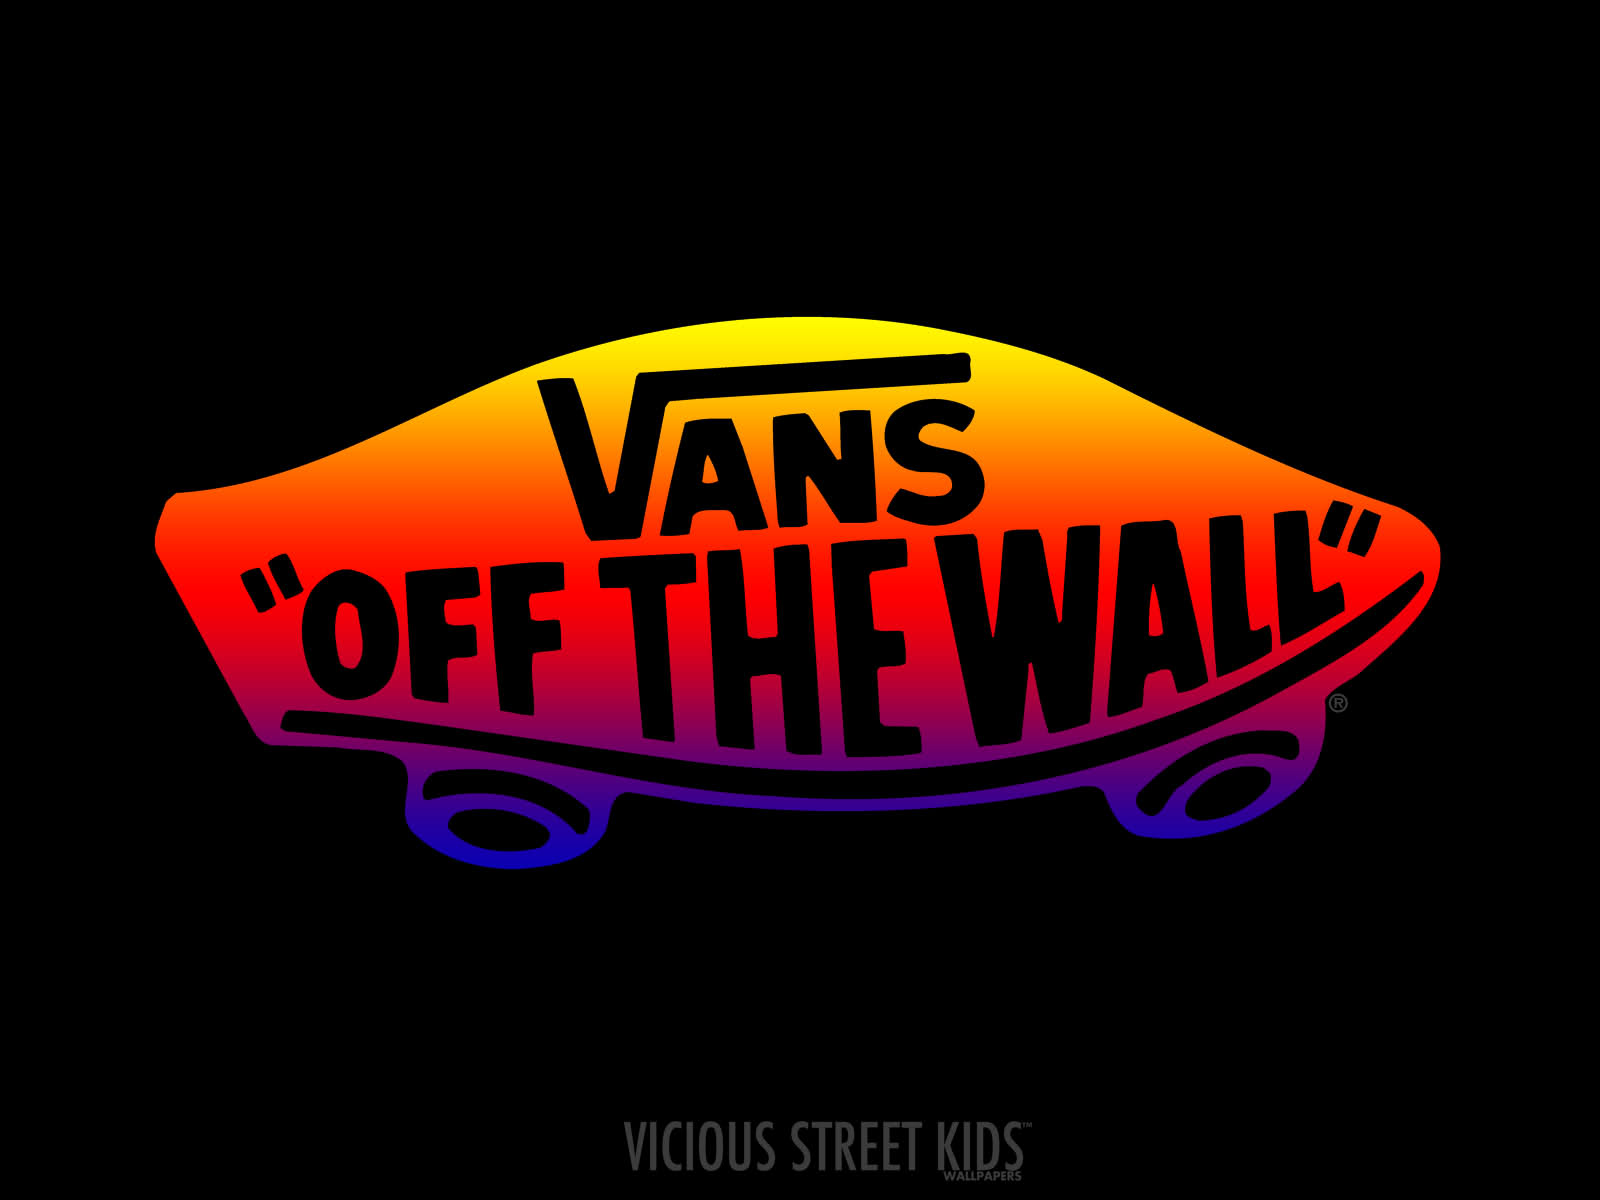 vans off the wall shoes 2014 terbaru